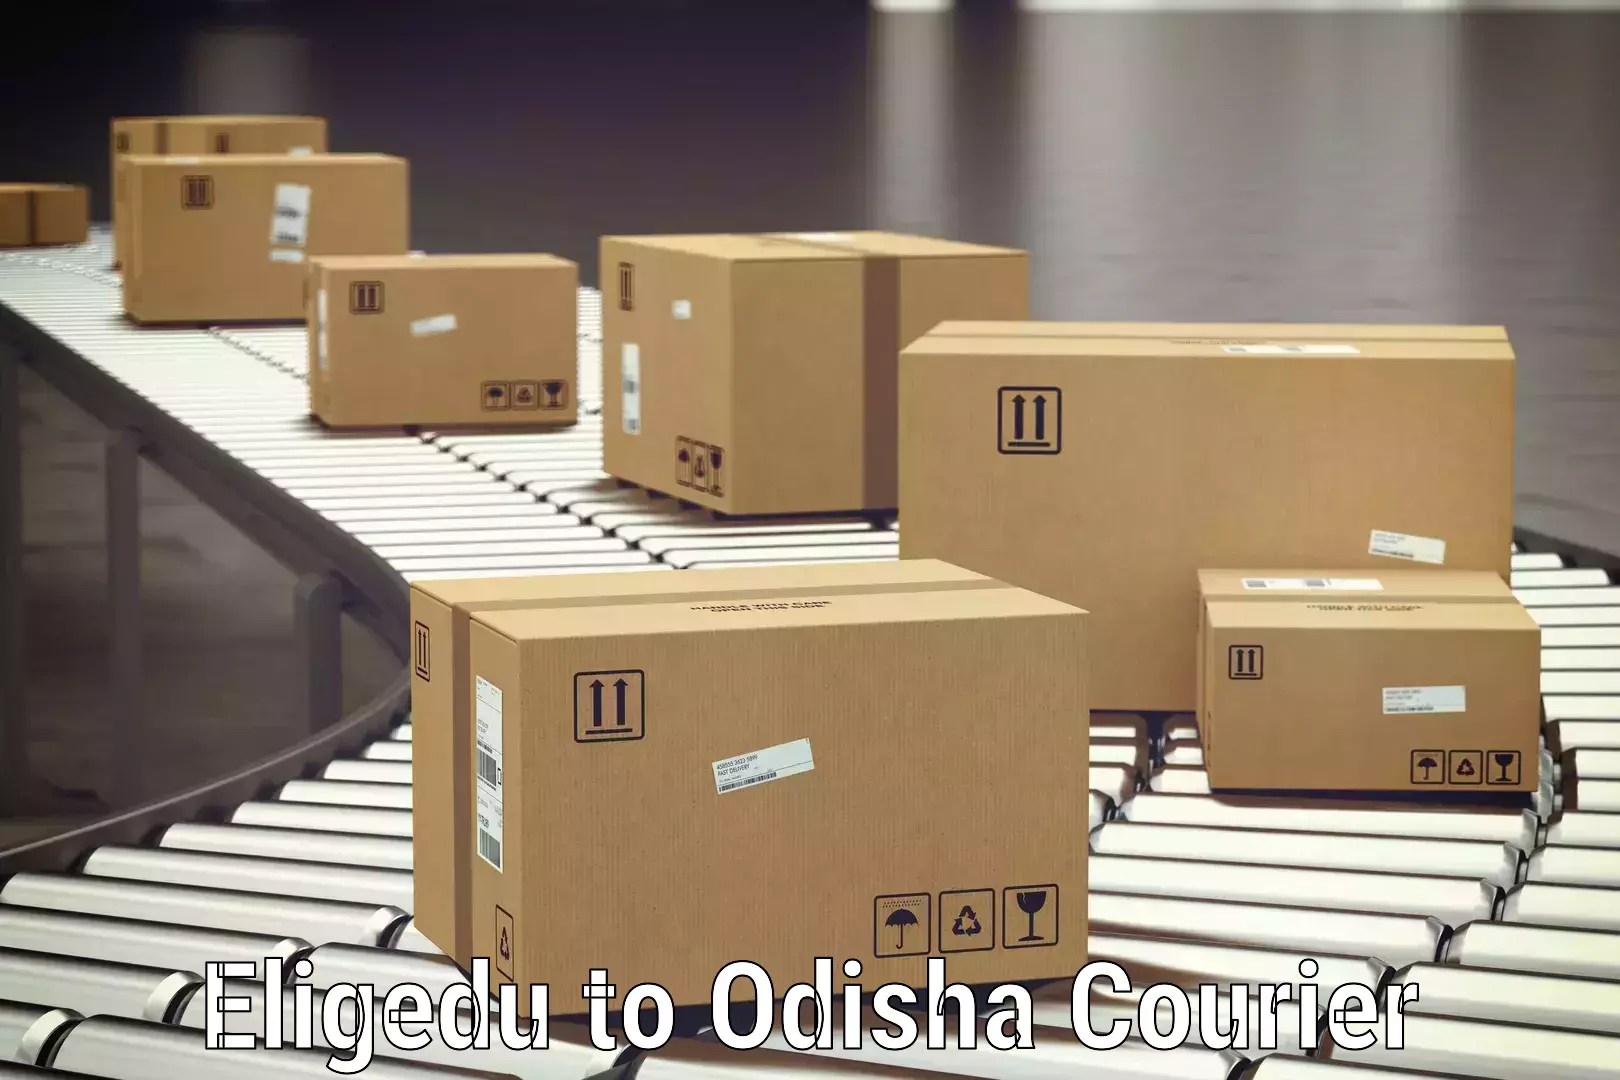 Luggage delivery system Eligedu to Odisha